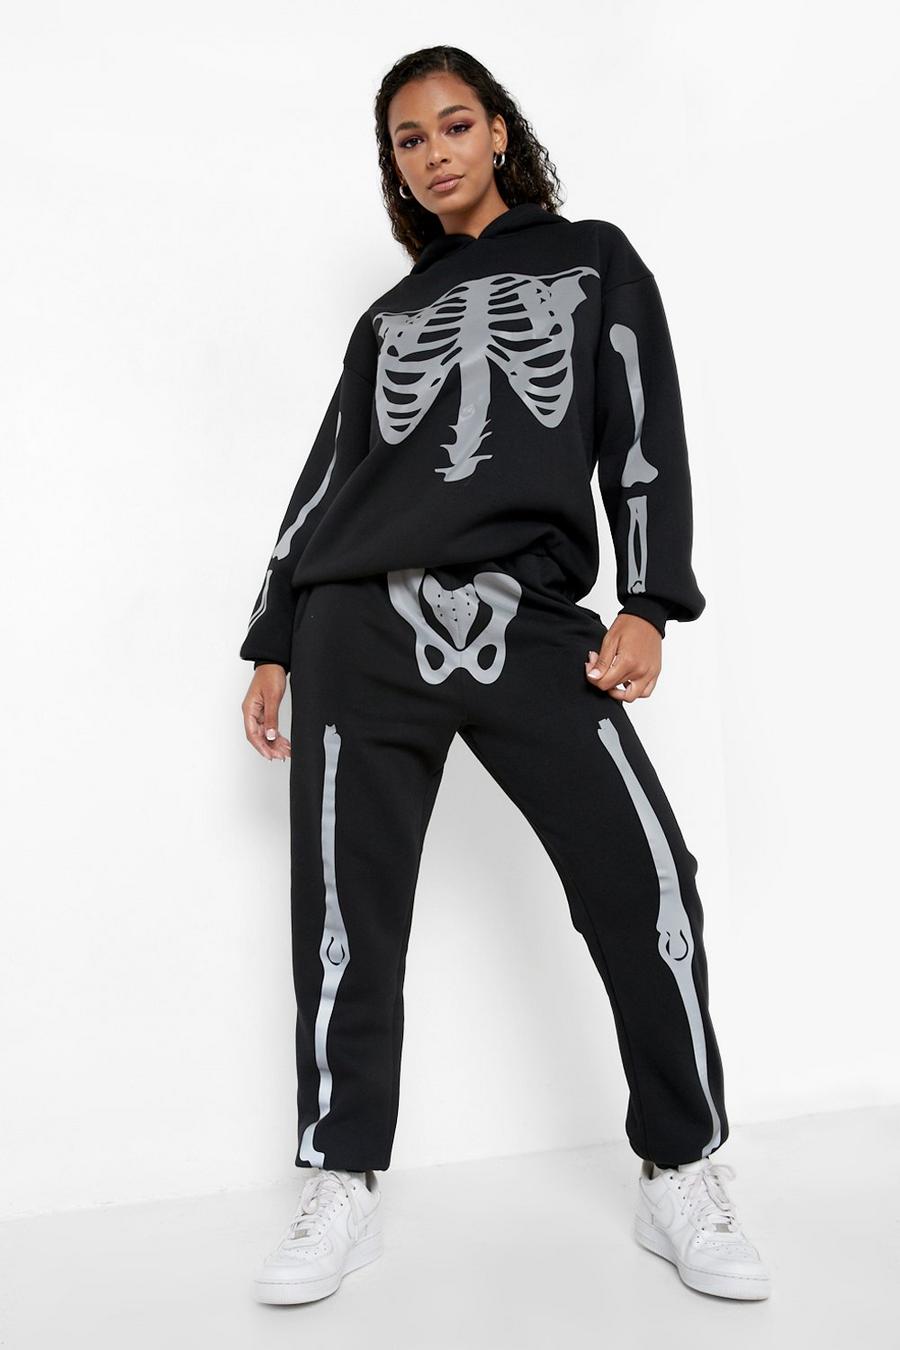 Chándal de Halloween reflectante con estampado de esqueleto, Black image number 1